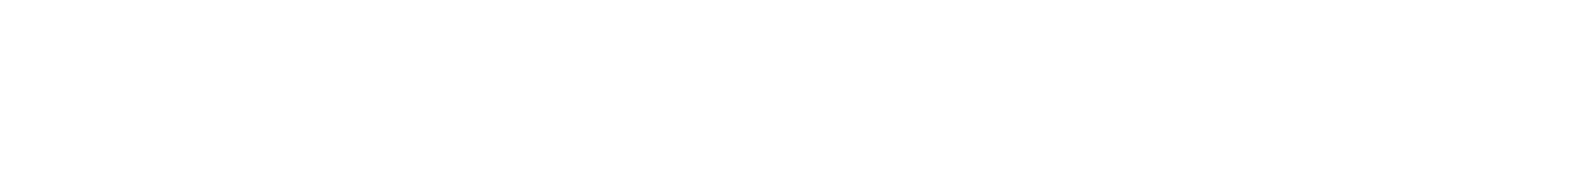 Sampo logo grand pour les fonds sombres (PNG transparent)